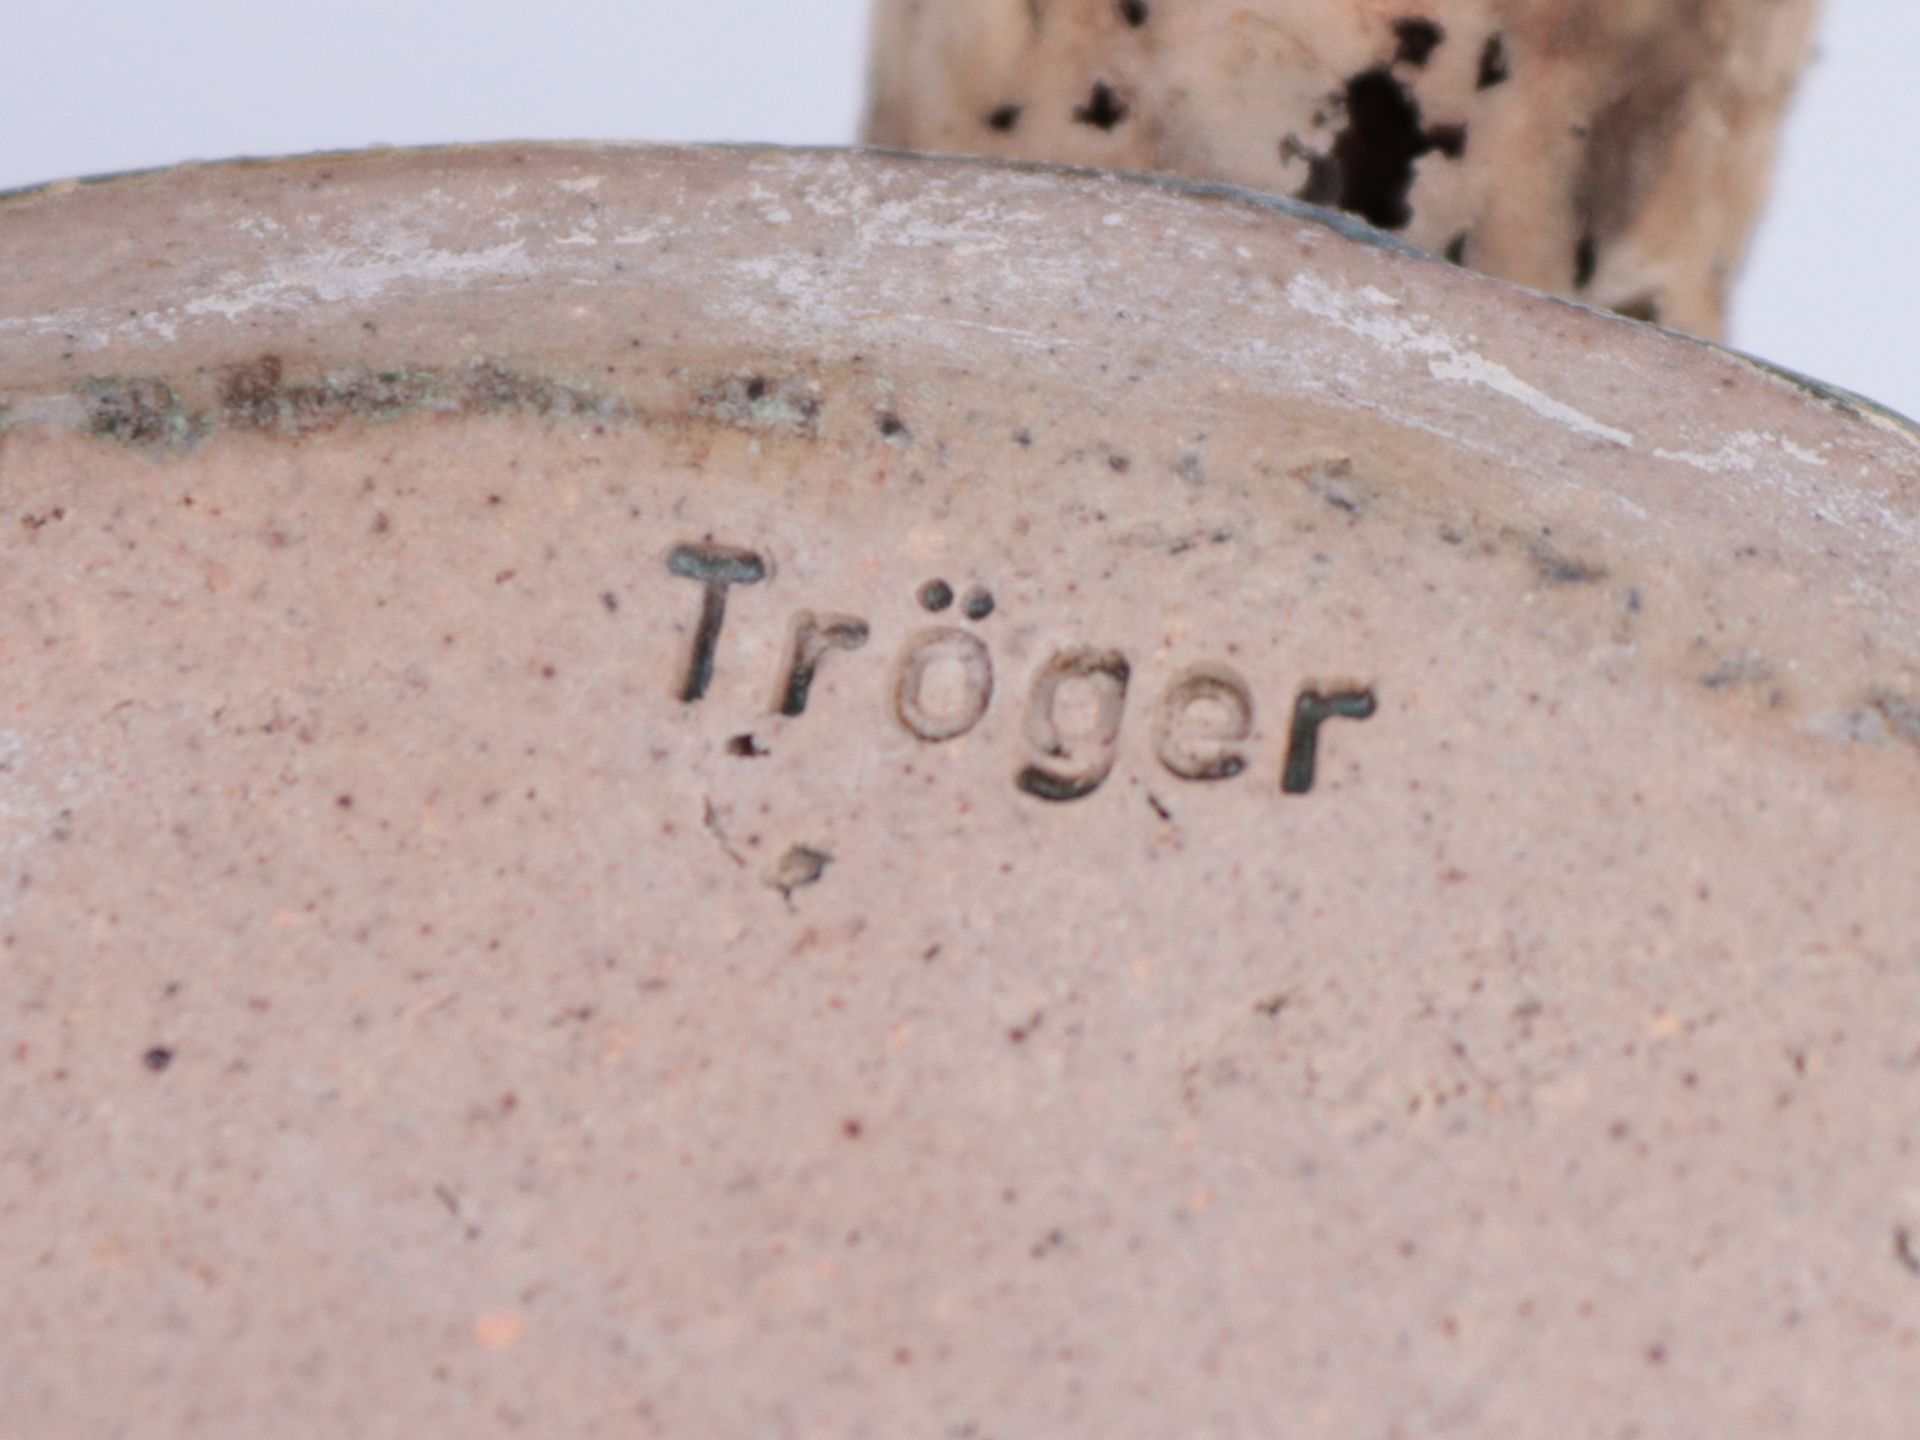 Tröger - Keramik - Image 4 of 5